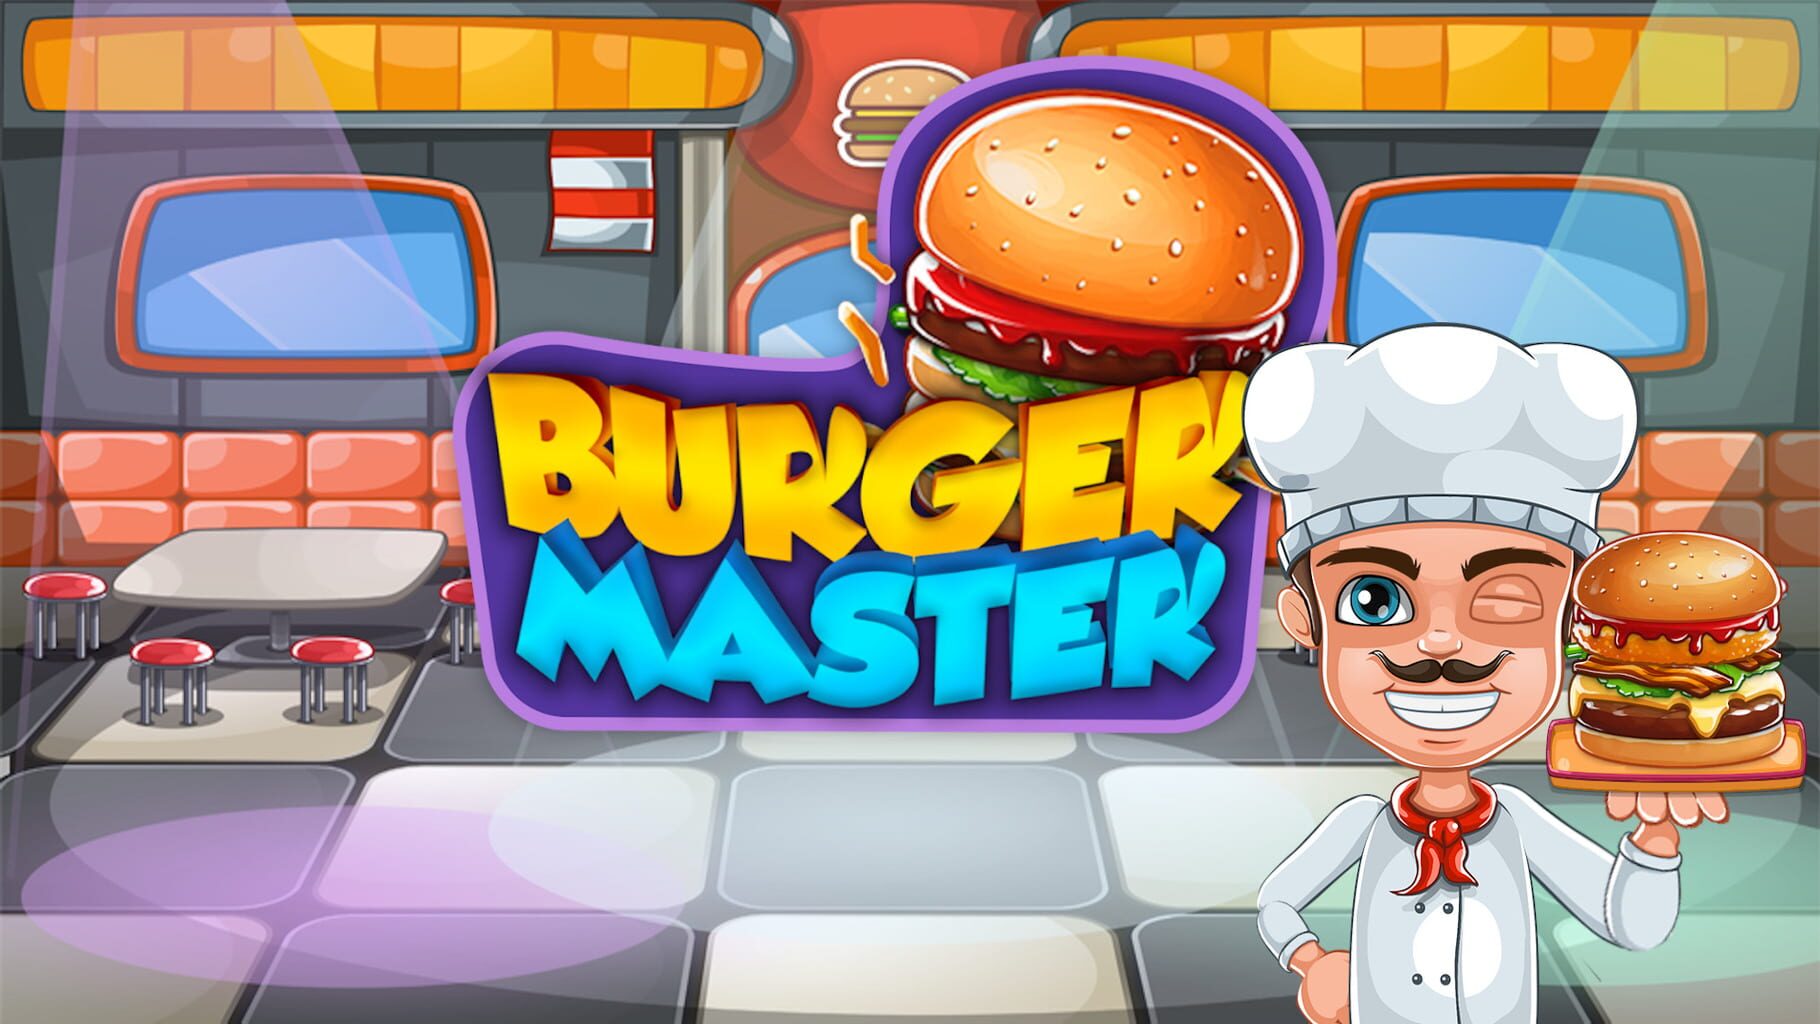 Burger Master artwork